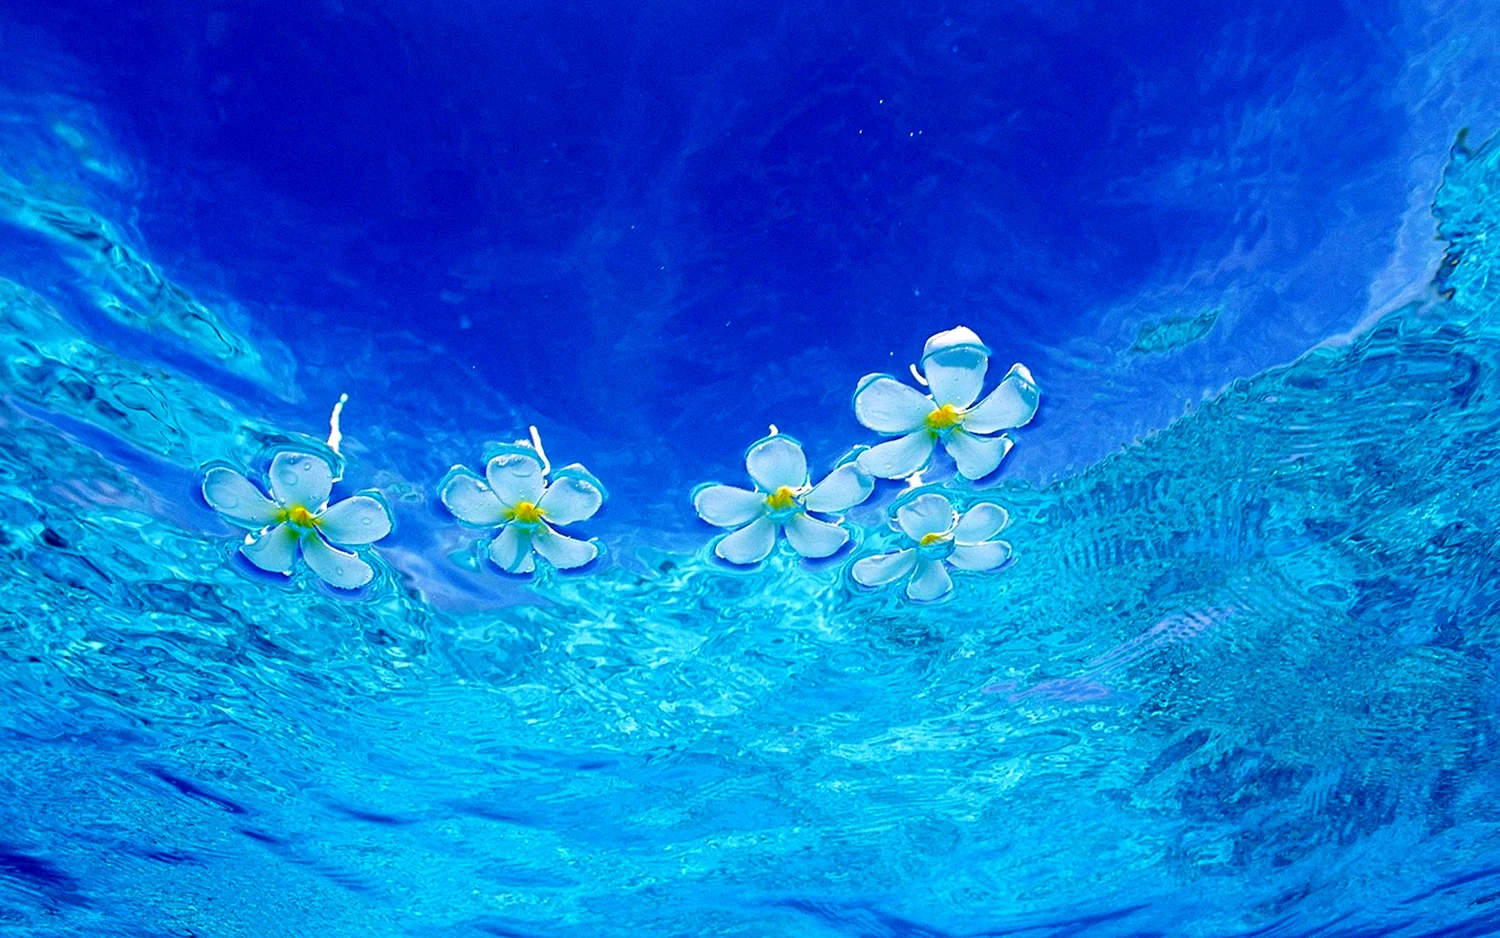 Цветы на воде